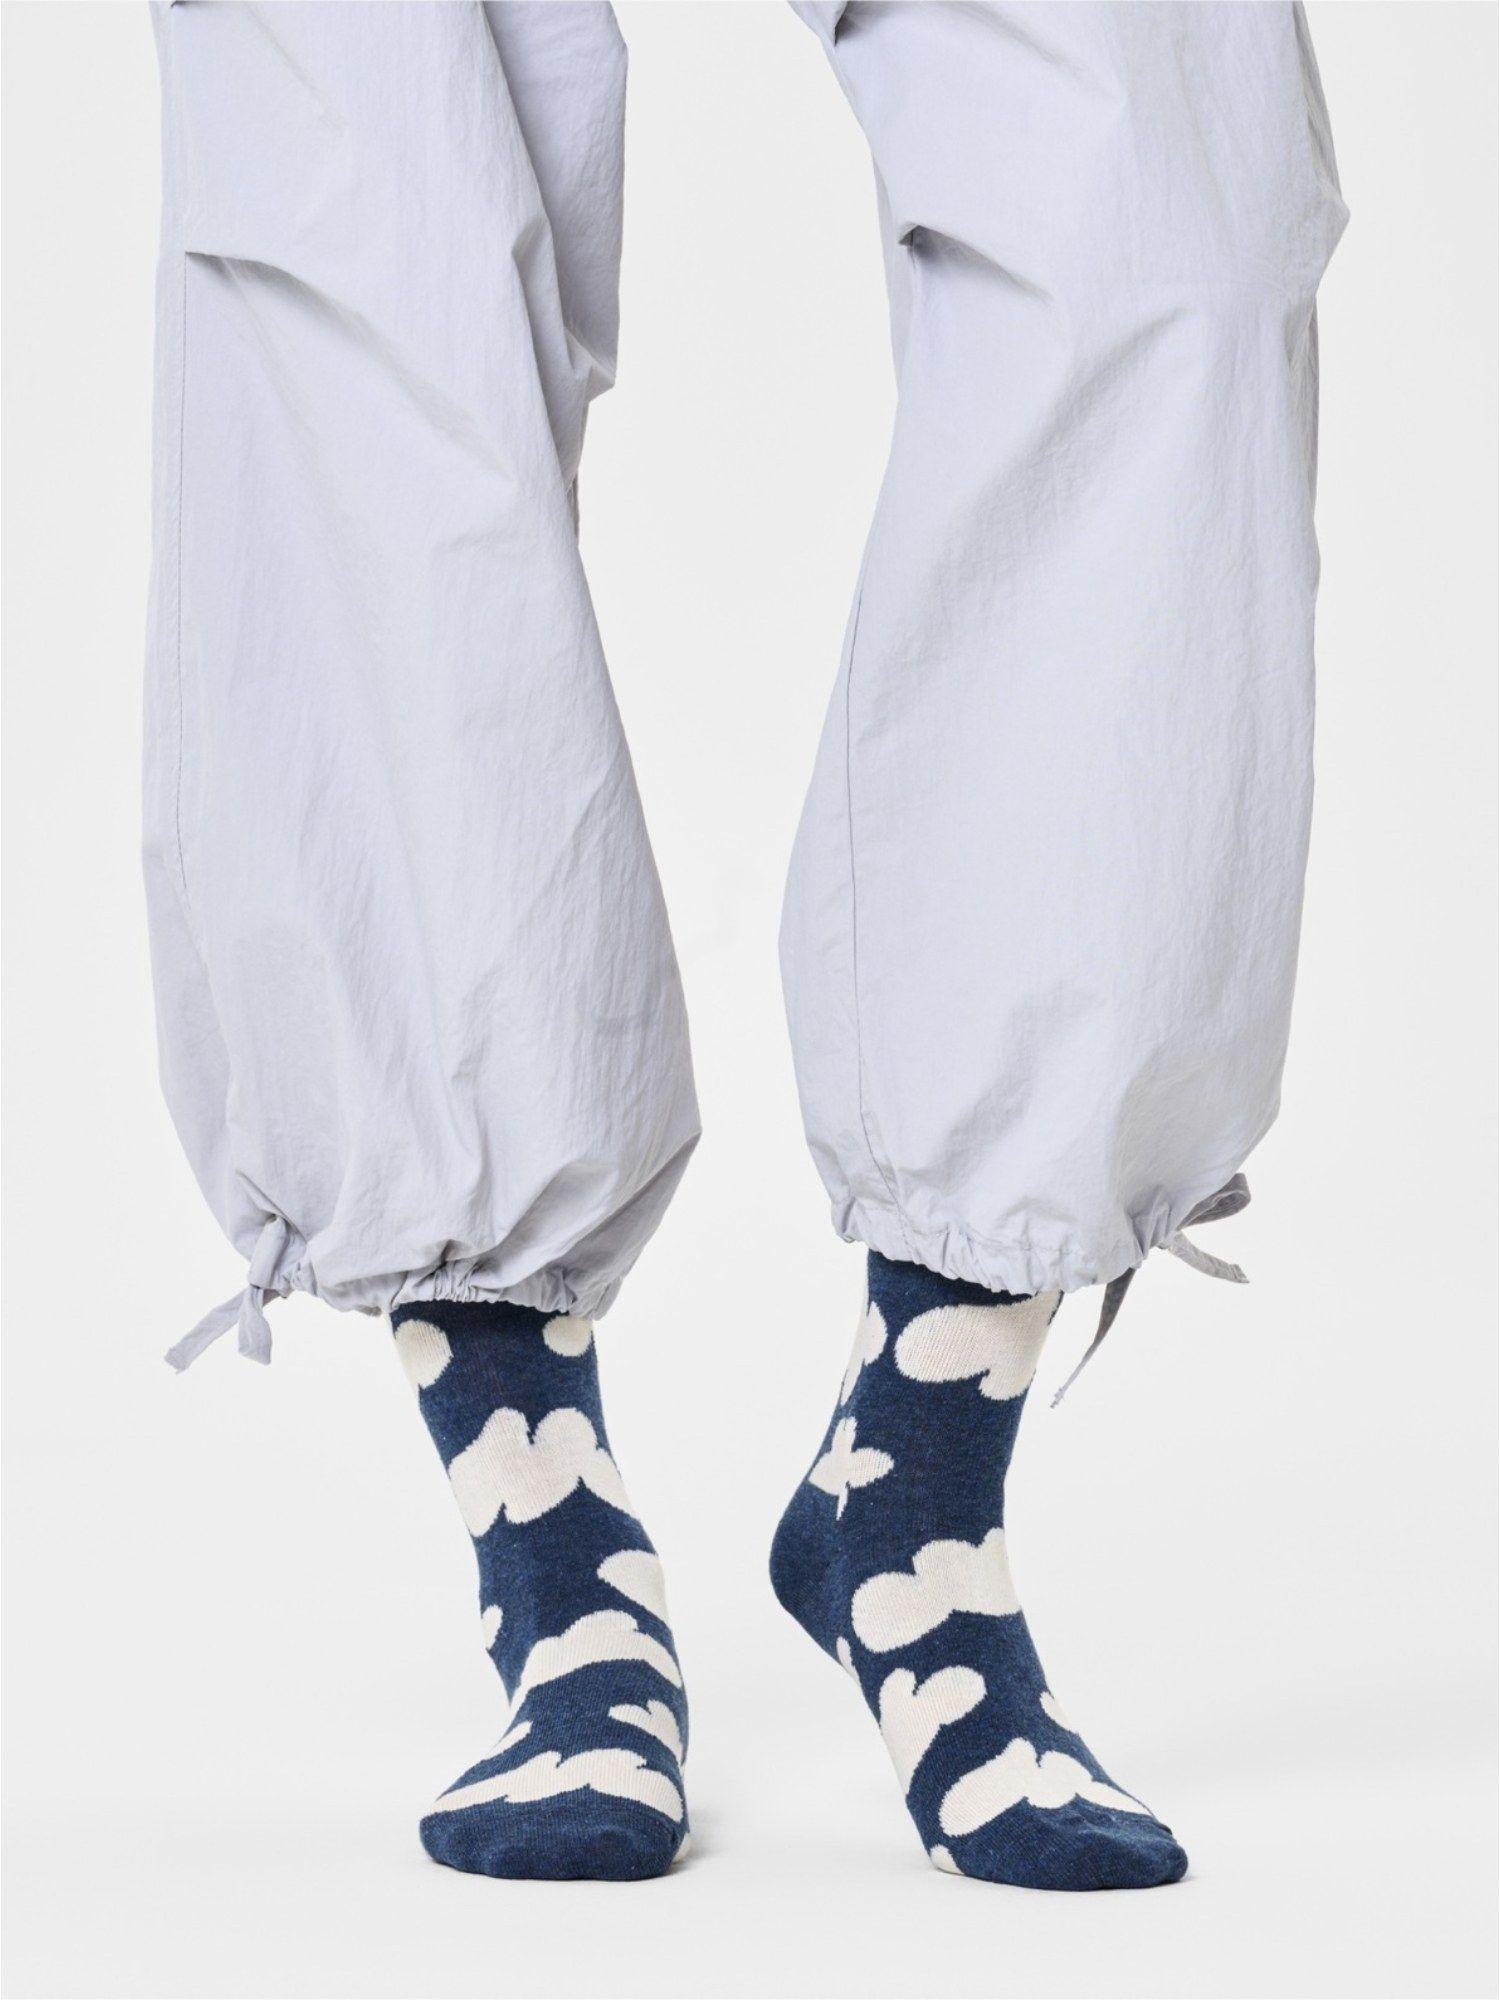 cloudy blue unisex socks